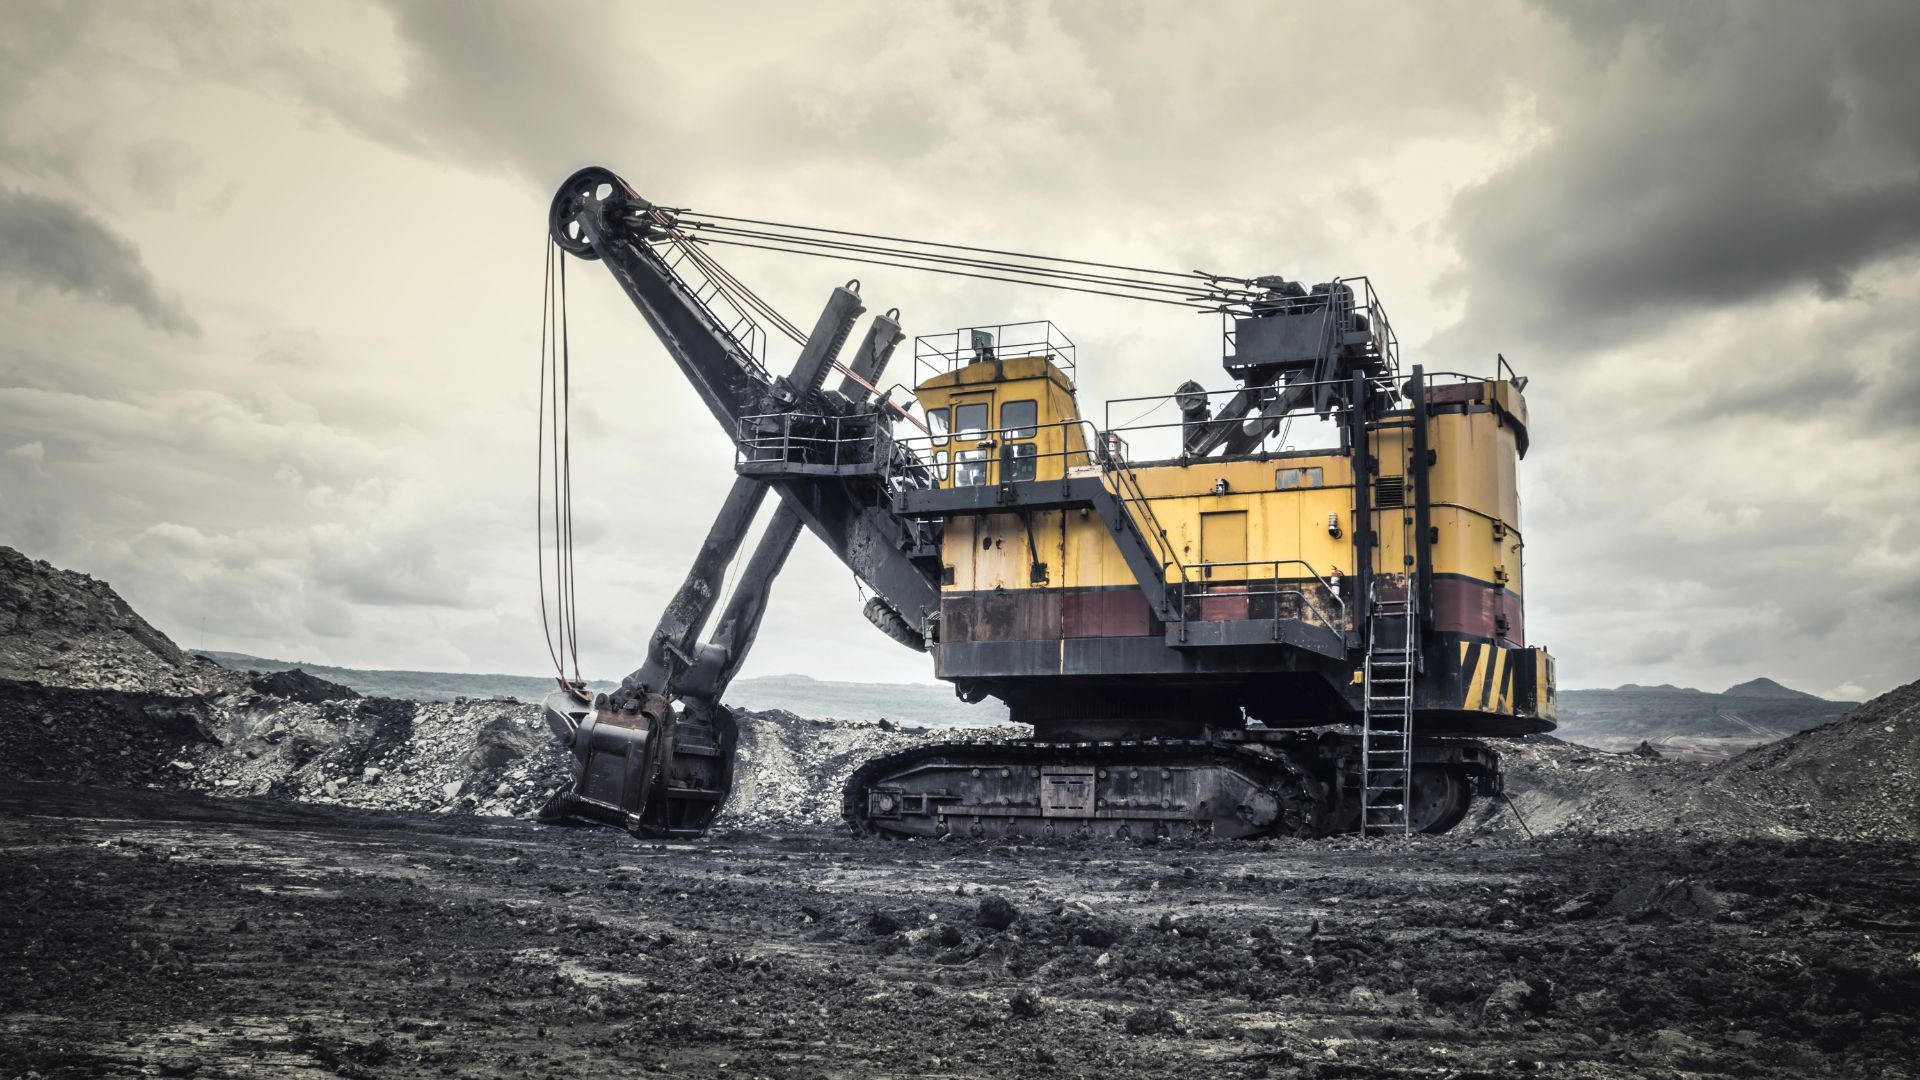 India No 1 in world coal mining boom, thanks to Coal India, Adani Group: German NGO